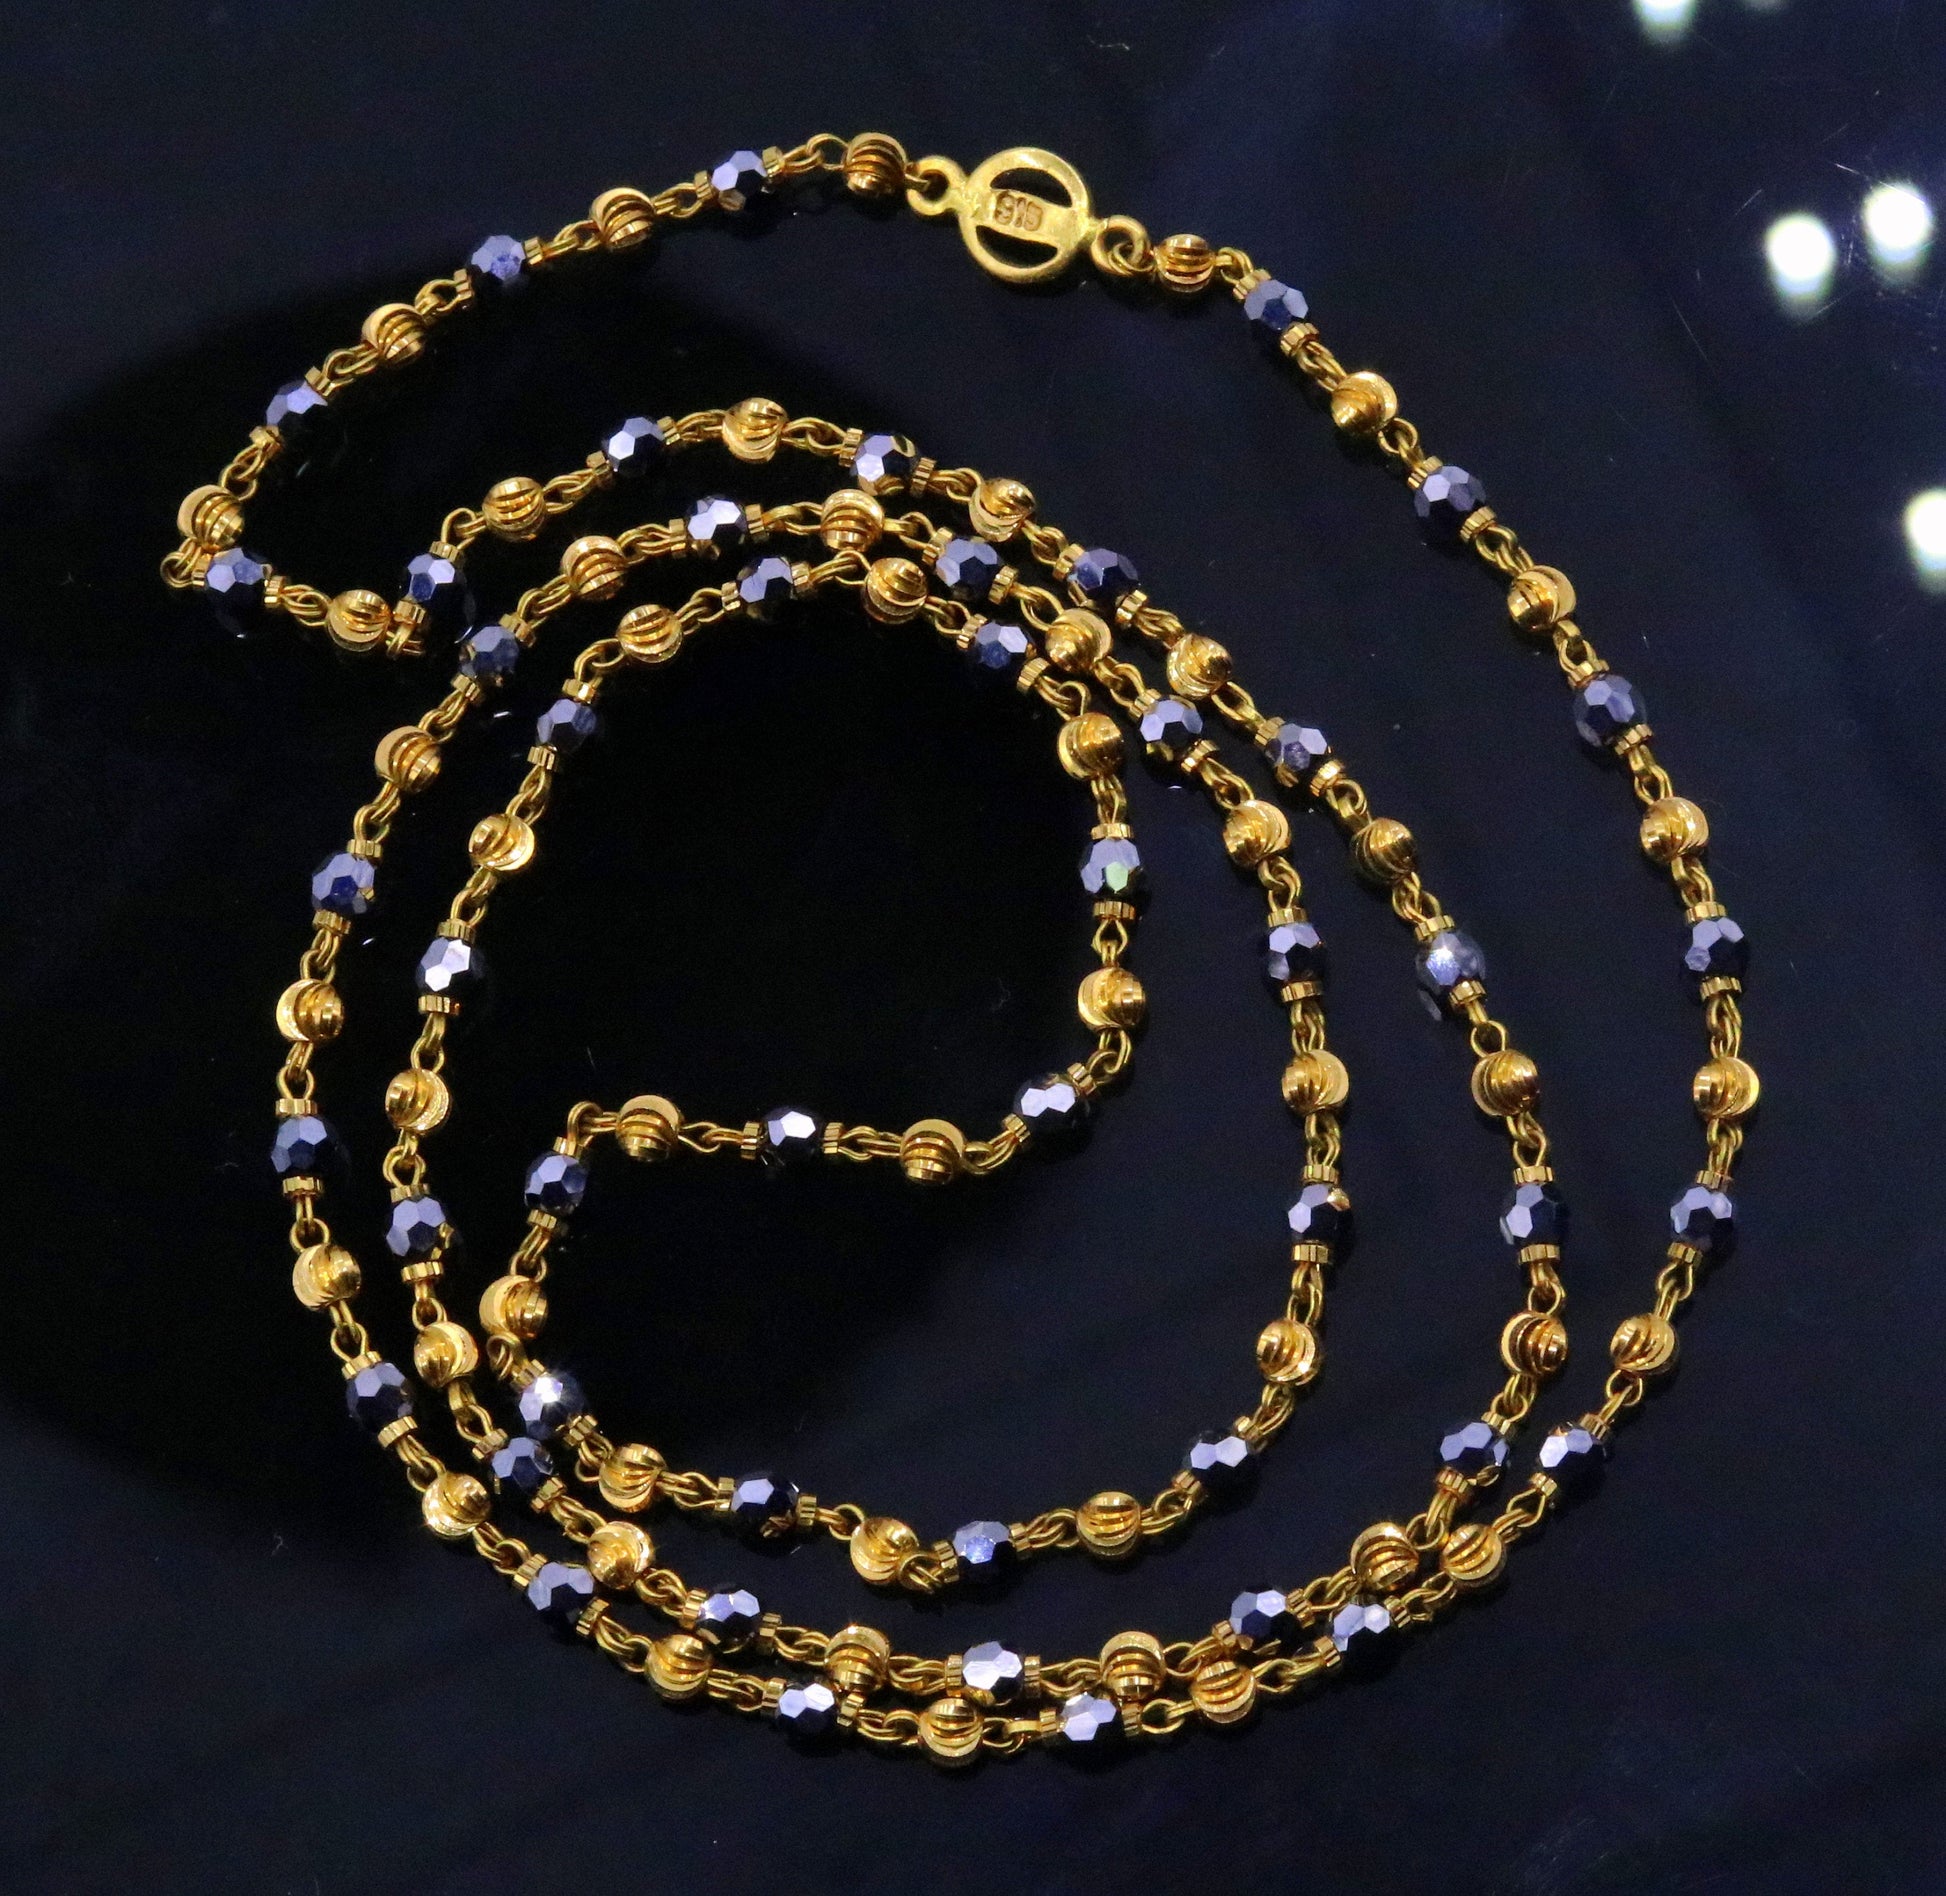 22kt yellow gold handmade fabulous diamond cut design beads with black stone beads mala chain necklace unisex jewelry - TRIBAL ORNAMENTS